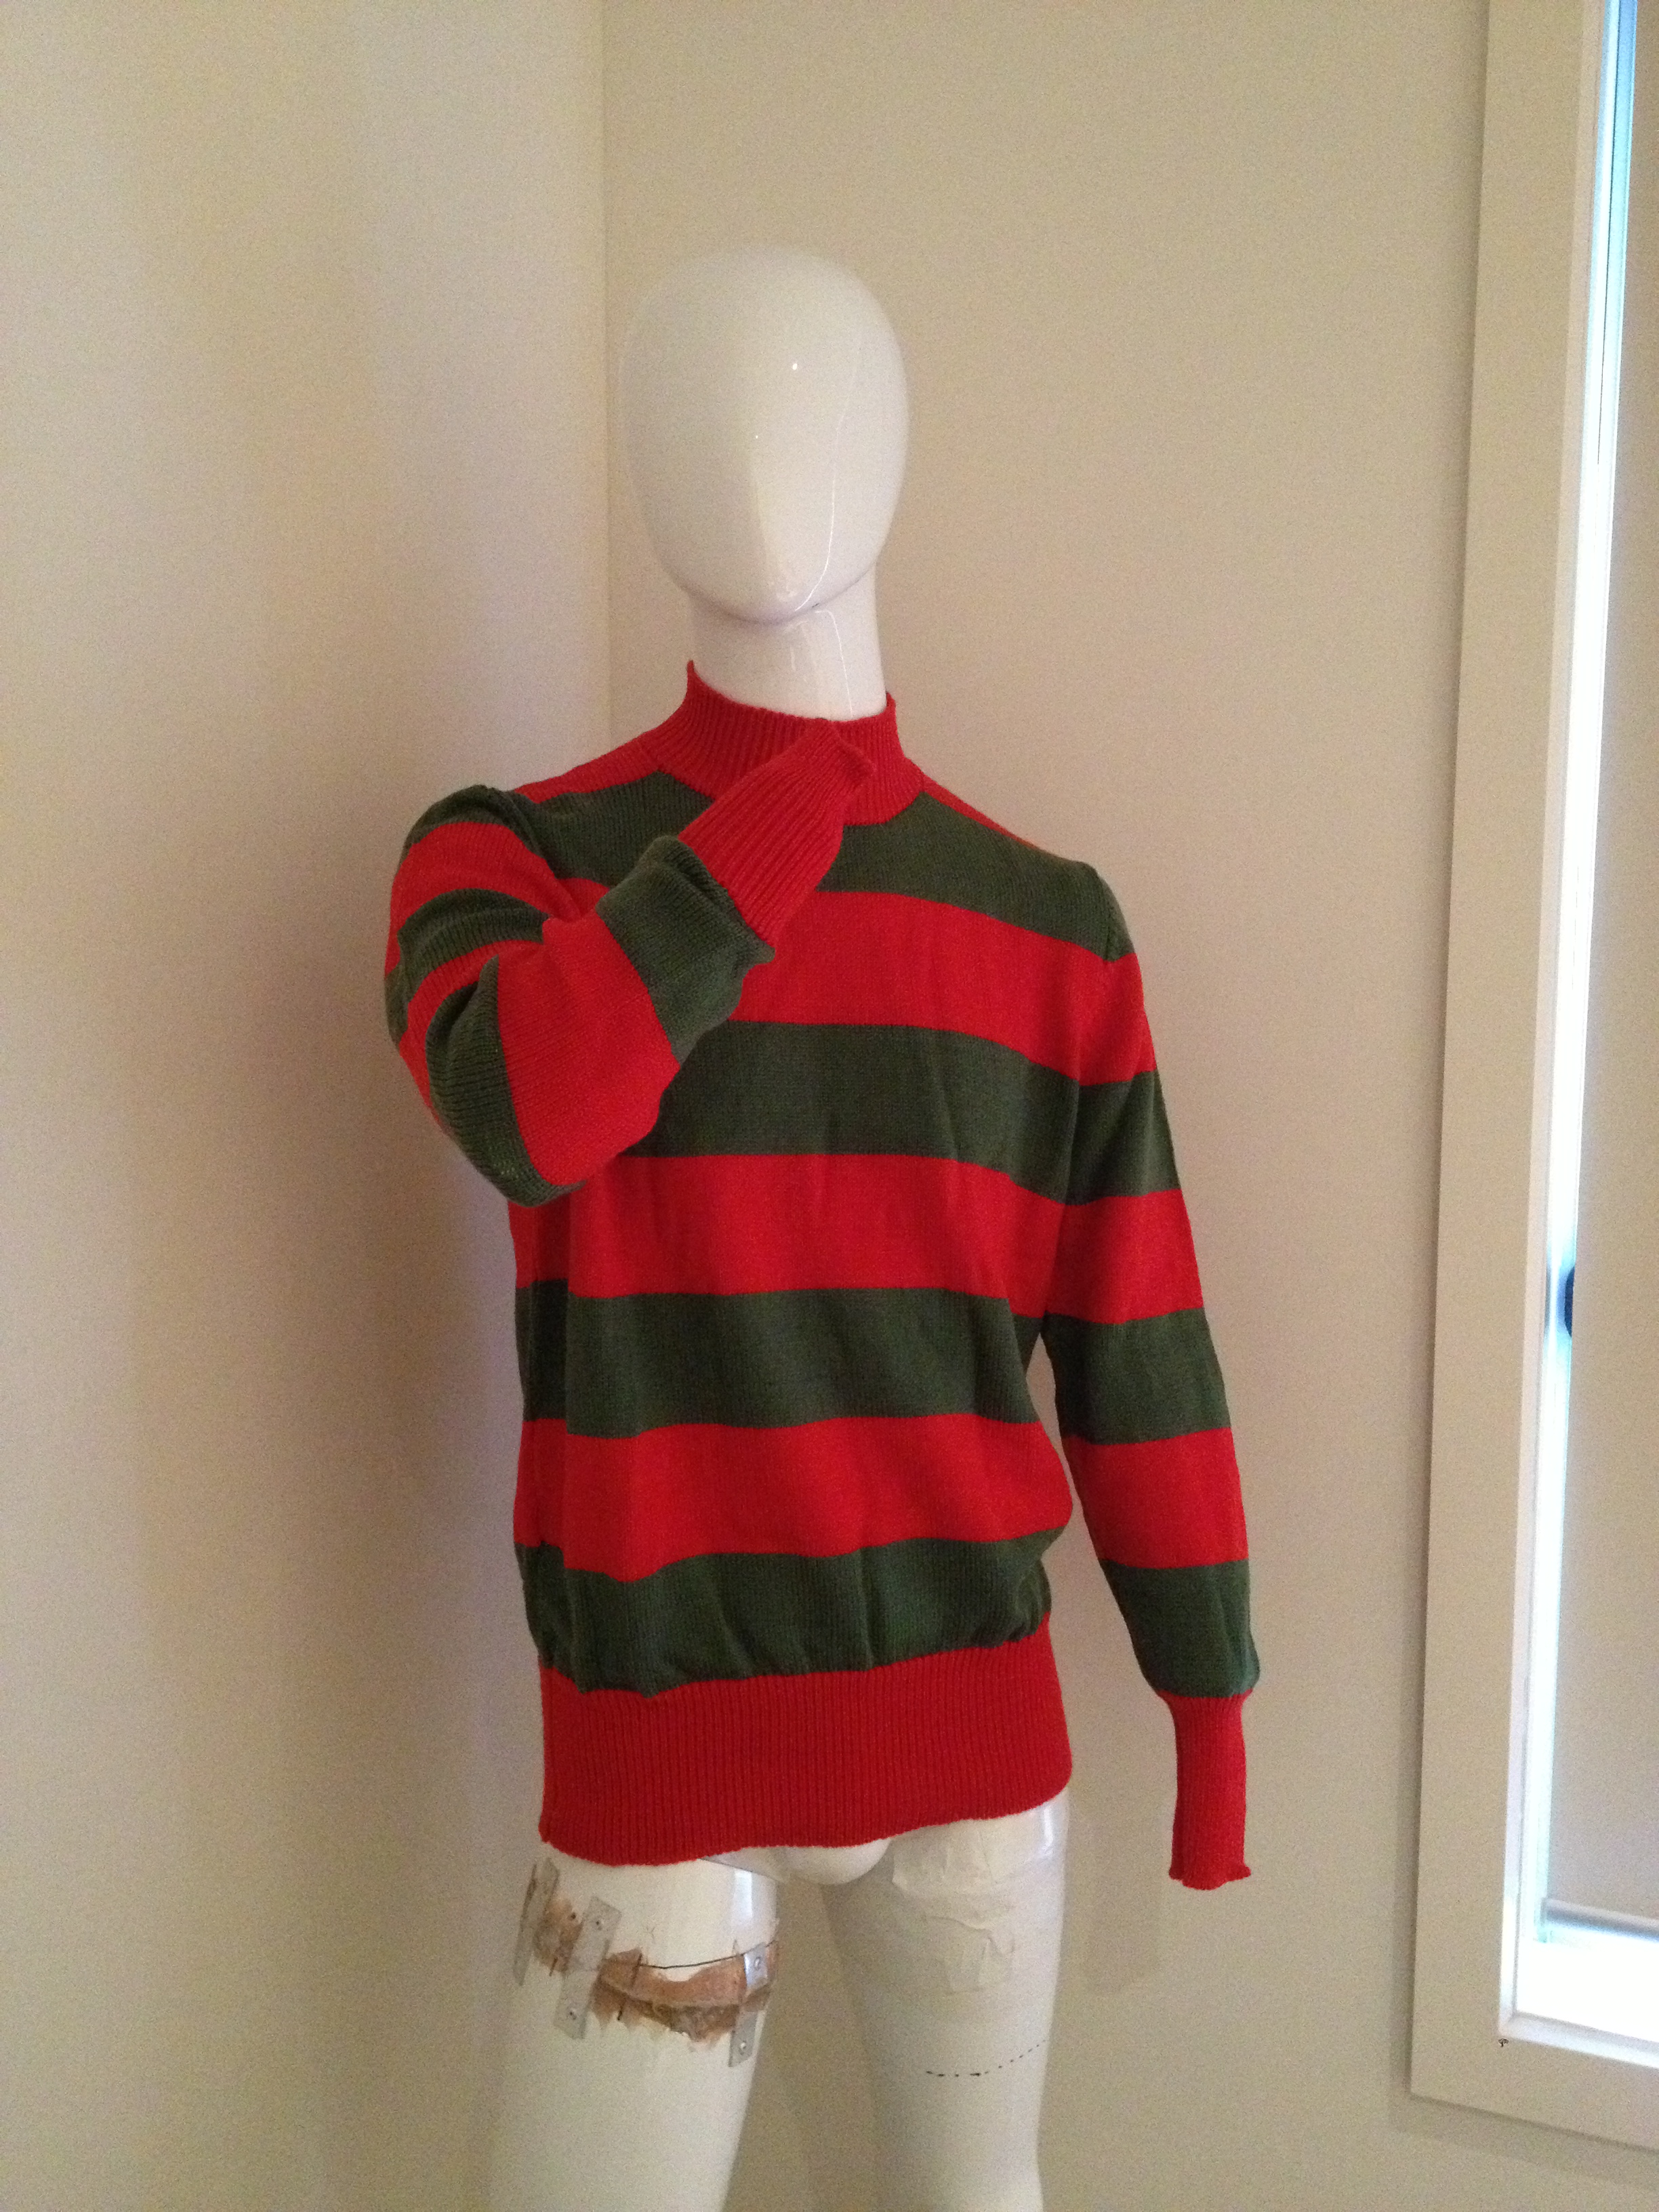 WIP My Lifesize Freddy Krueger | RPF Costume and Prop Maker Community